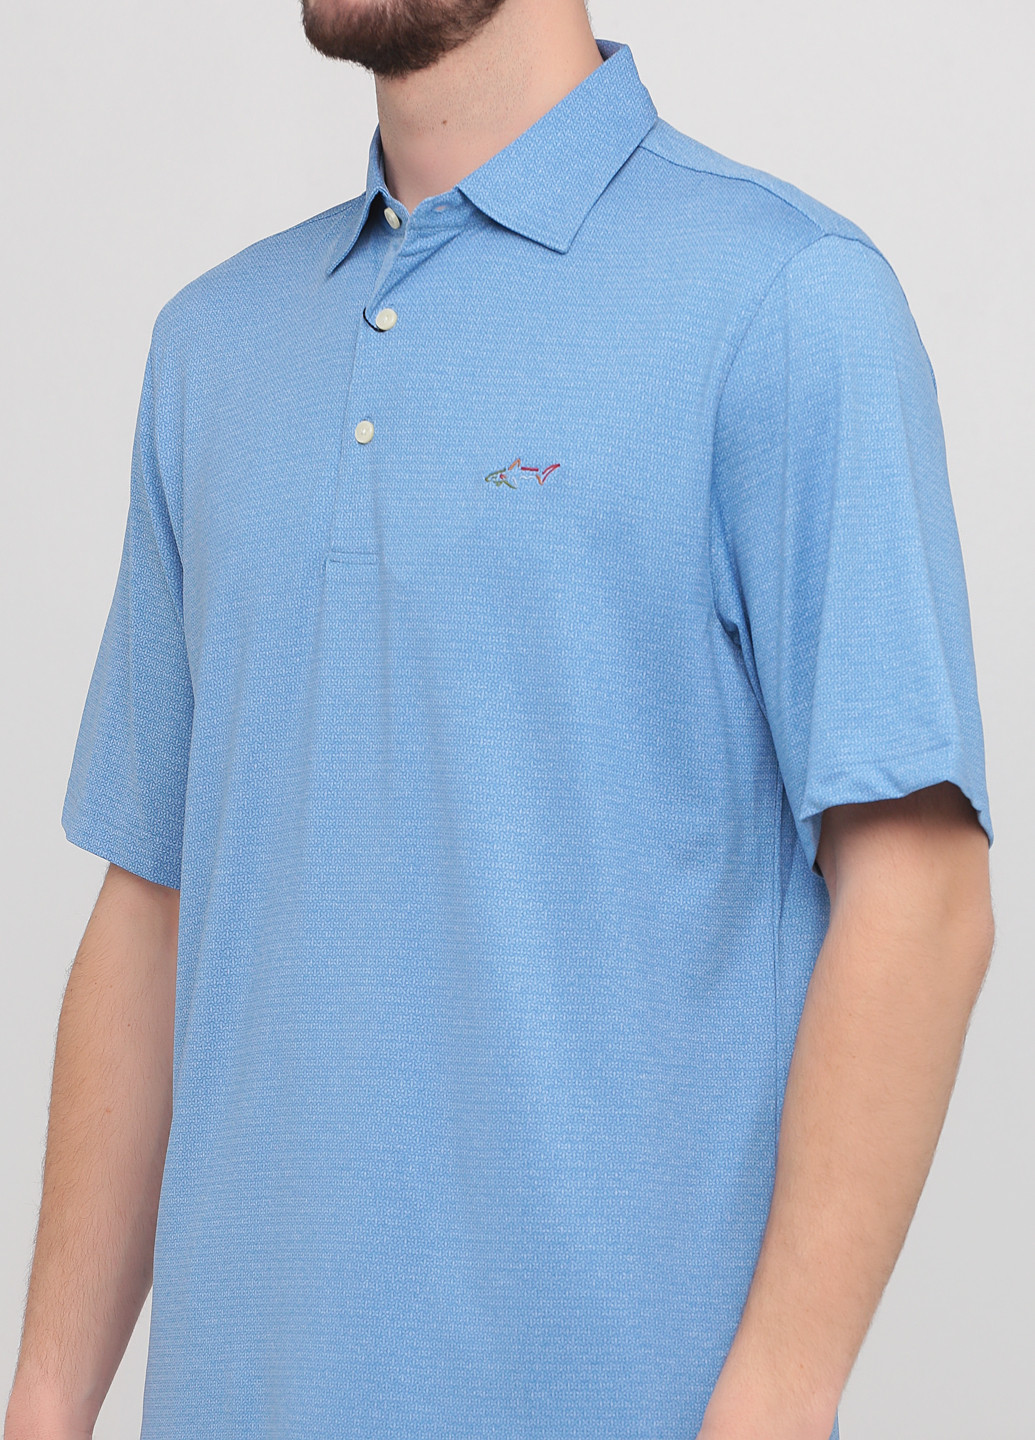 Темно-голубой футболка-поло для мужчин Greg Norman с орнаментом